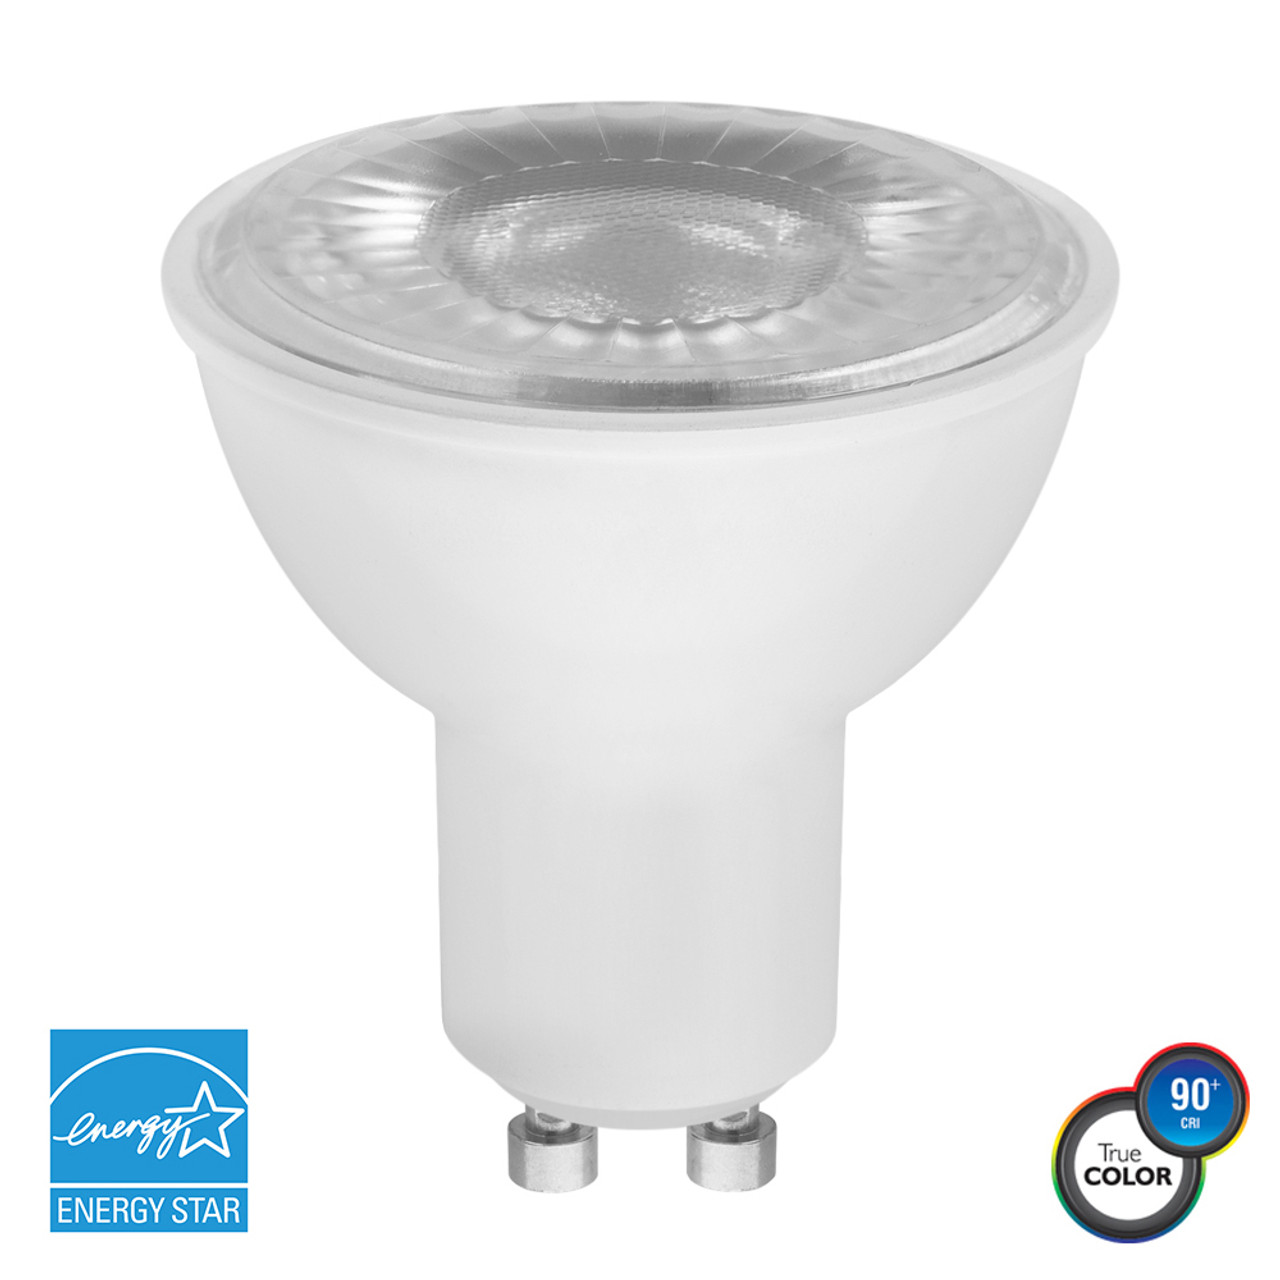 PAR16, Wide Spot, LED Light Bulb, Dimmable, 7 W, 120 V, 450 lm, 5000 K, GU10 Base (EP16-4050ew)